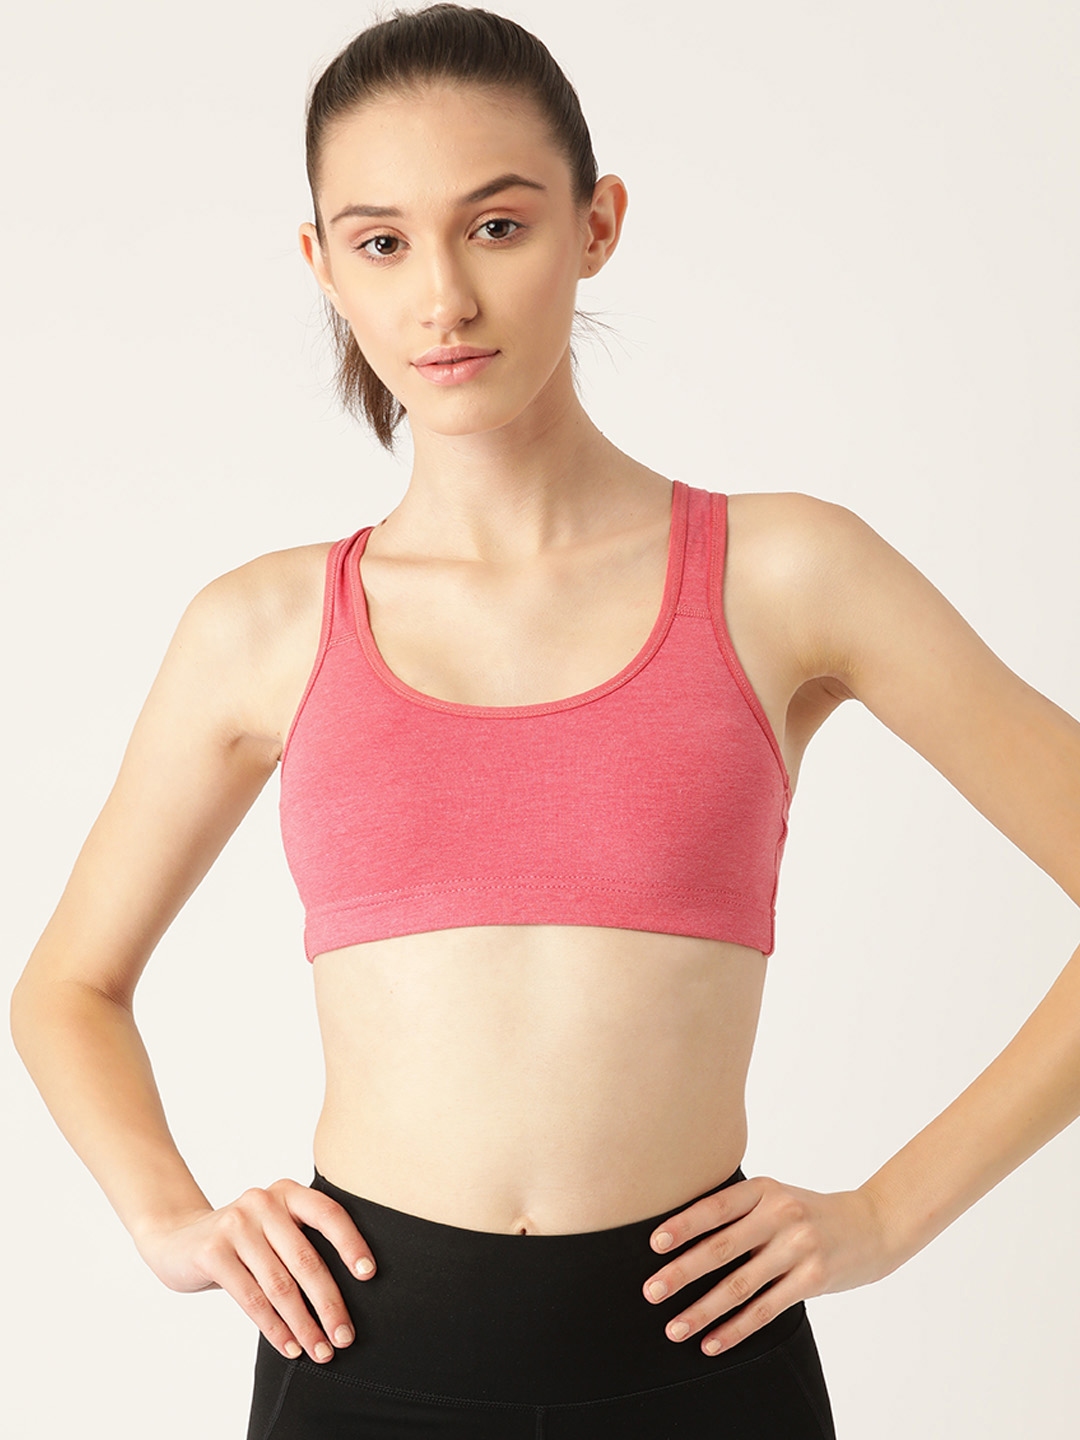 Lady Lyka Medium Impact Seamless Cotton Sports Bra - Hot Pink